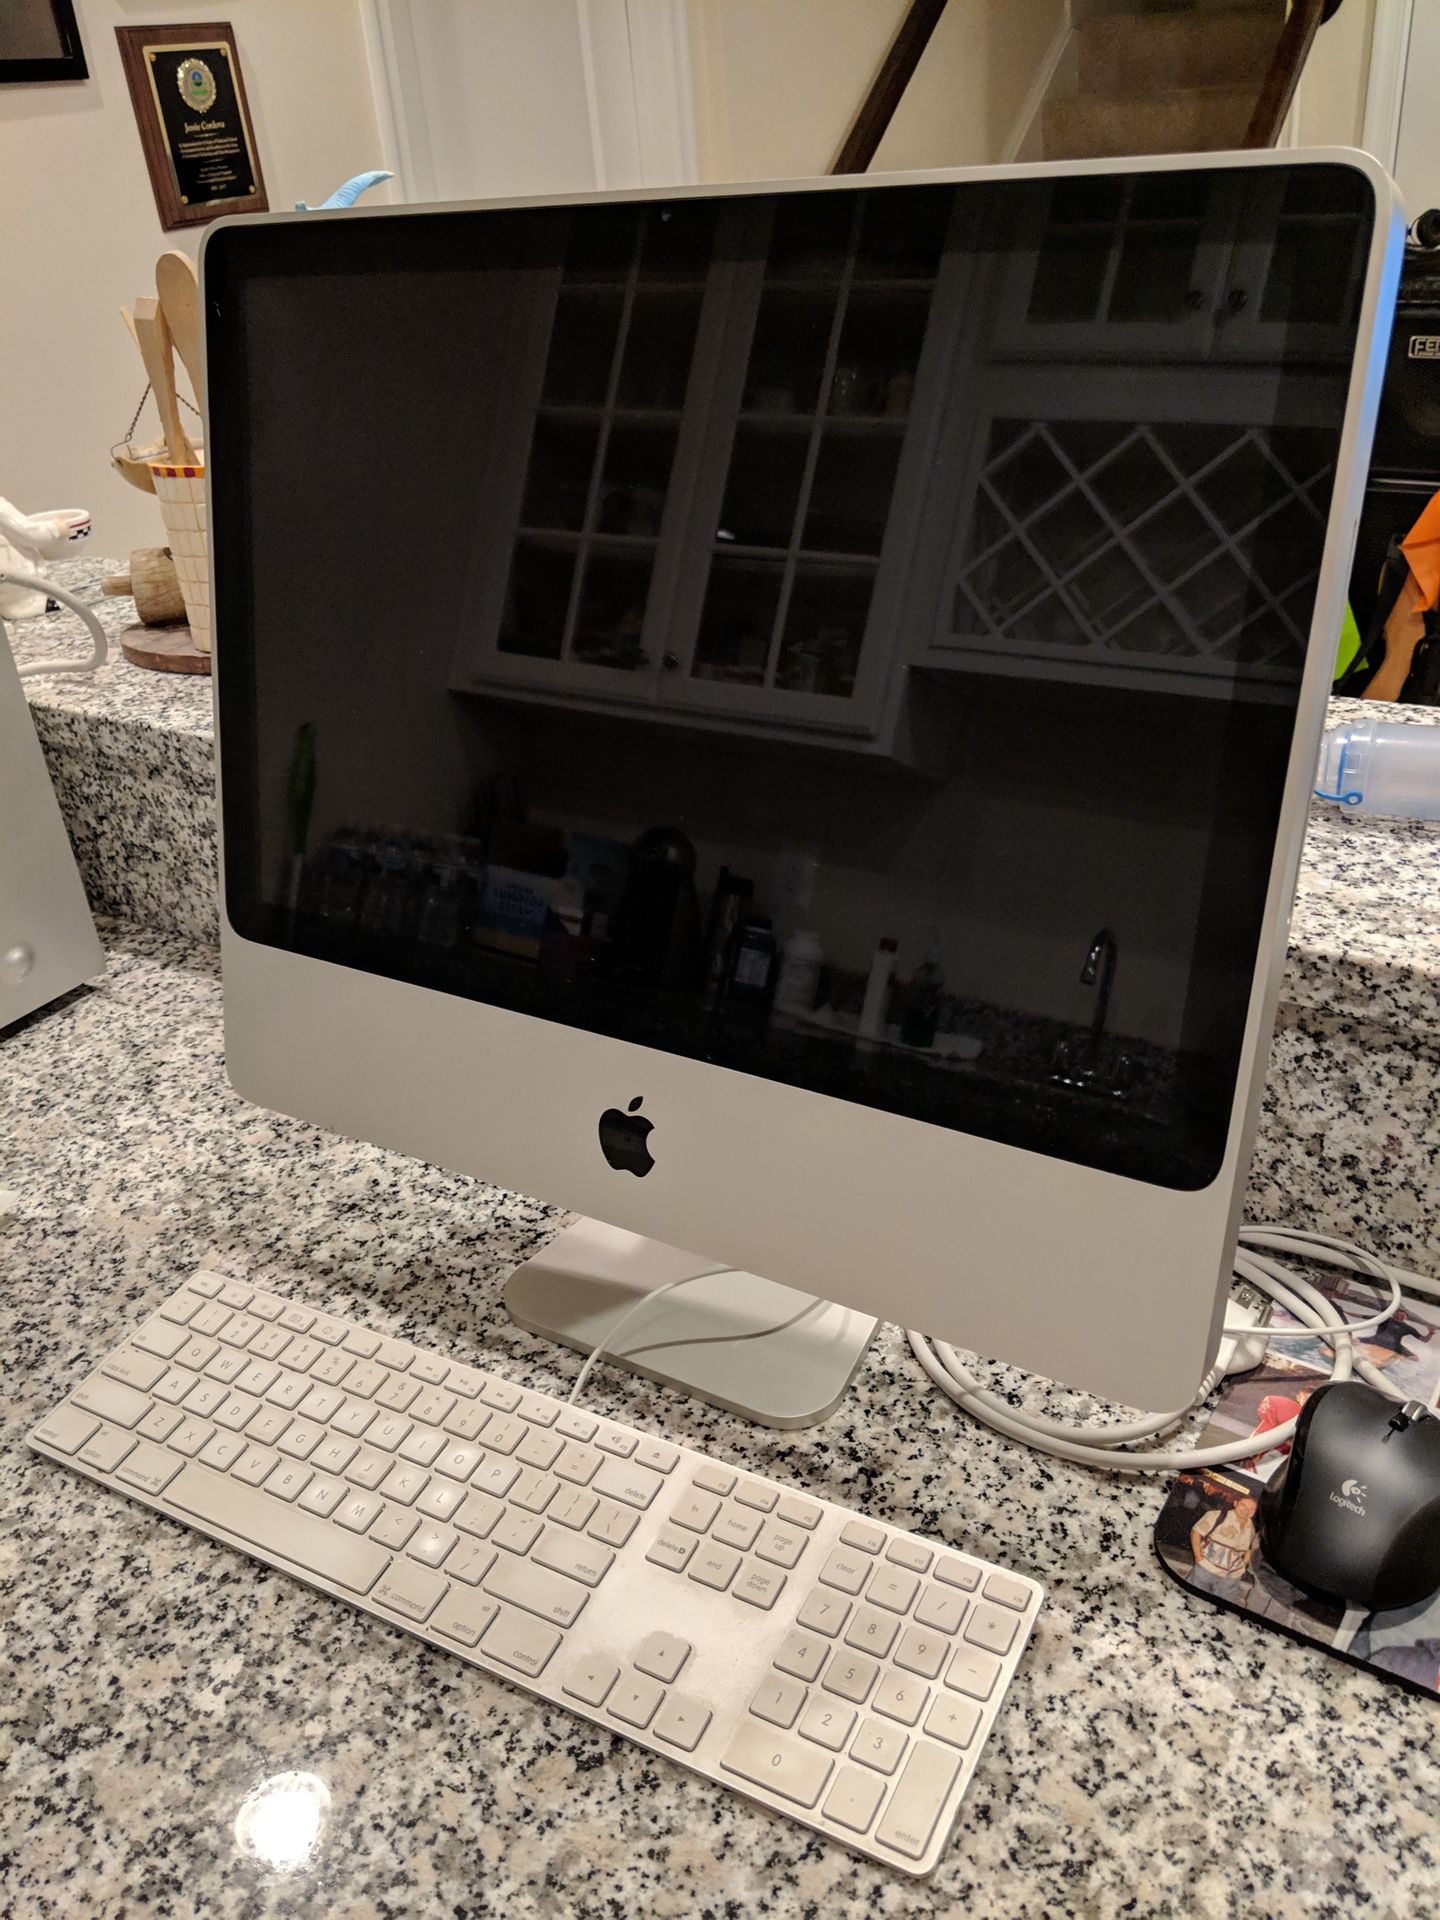 iMac 20” Late 2007 Model